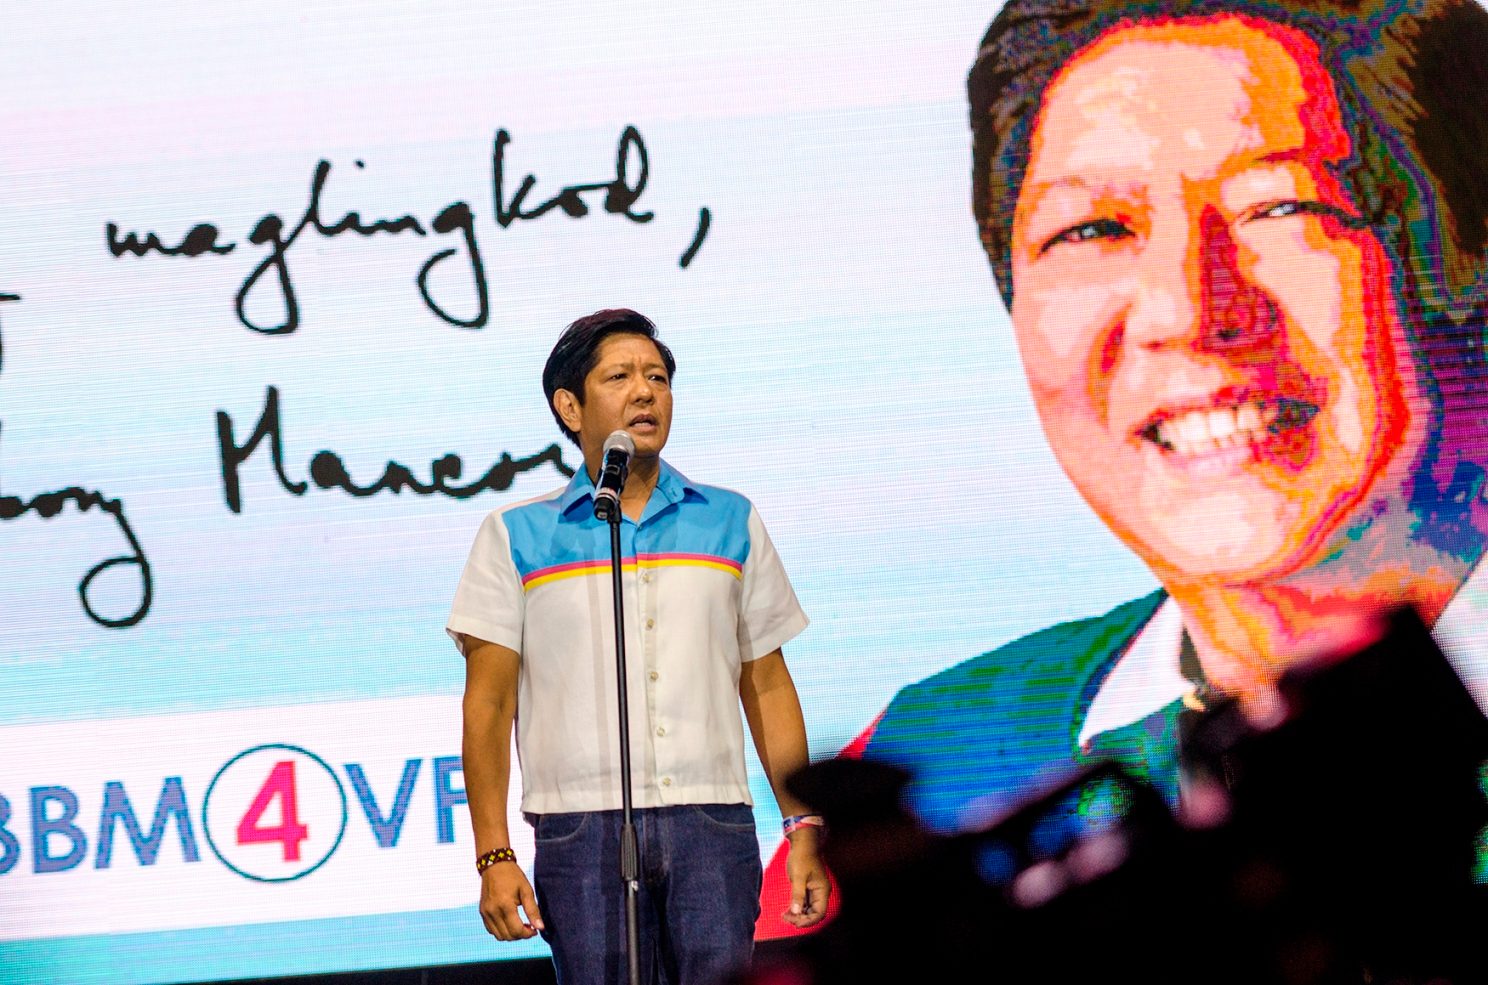 Marcos wins in Metro Manila, enjoys big lead over Robredo